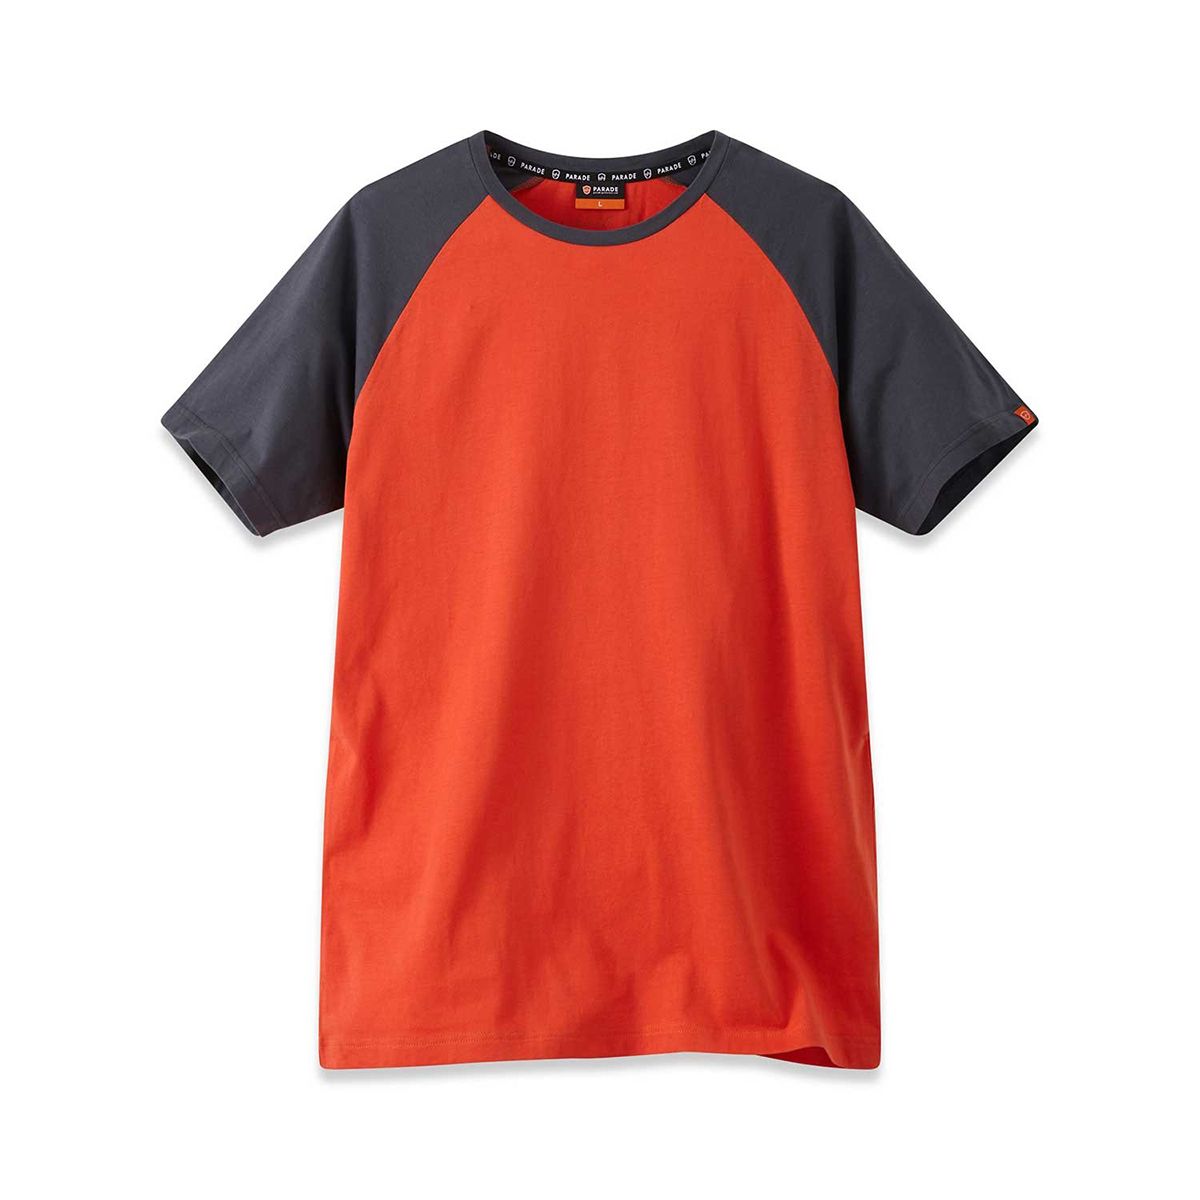 Parade Orange Cotton Short Sleeve T-Shirt, UK- M, EUR- M